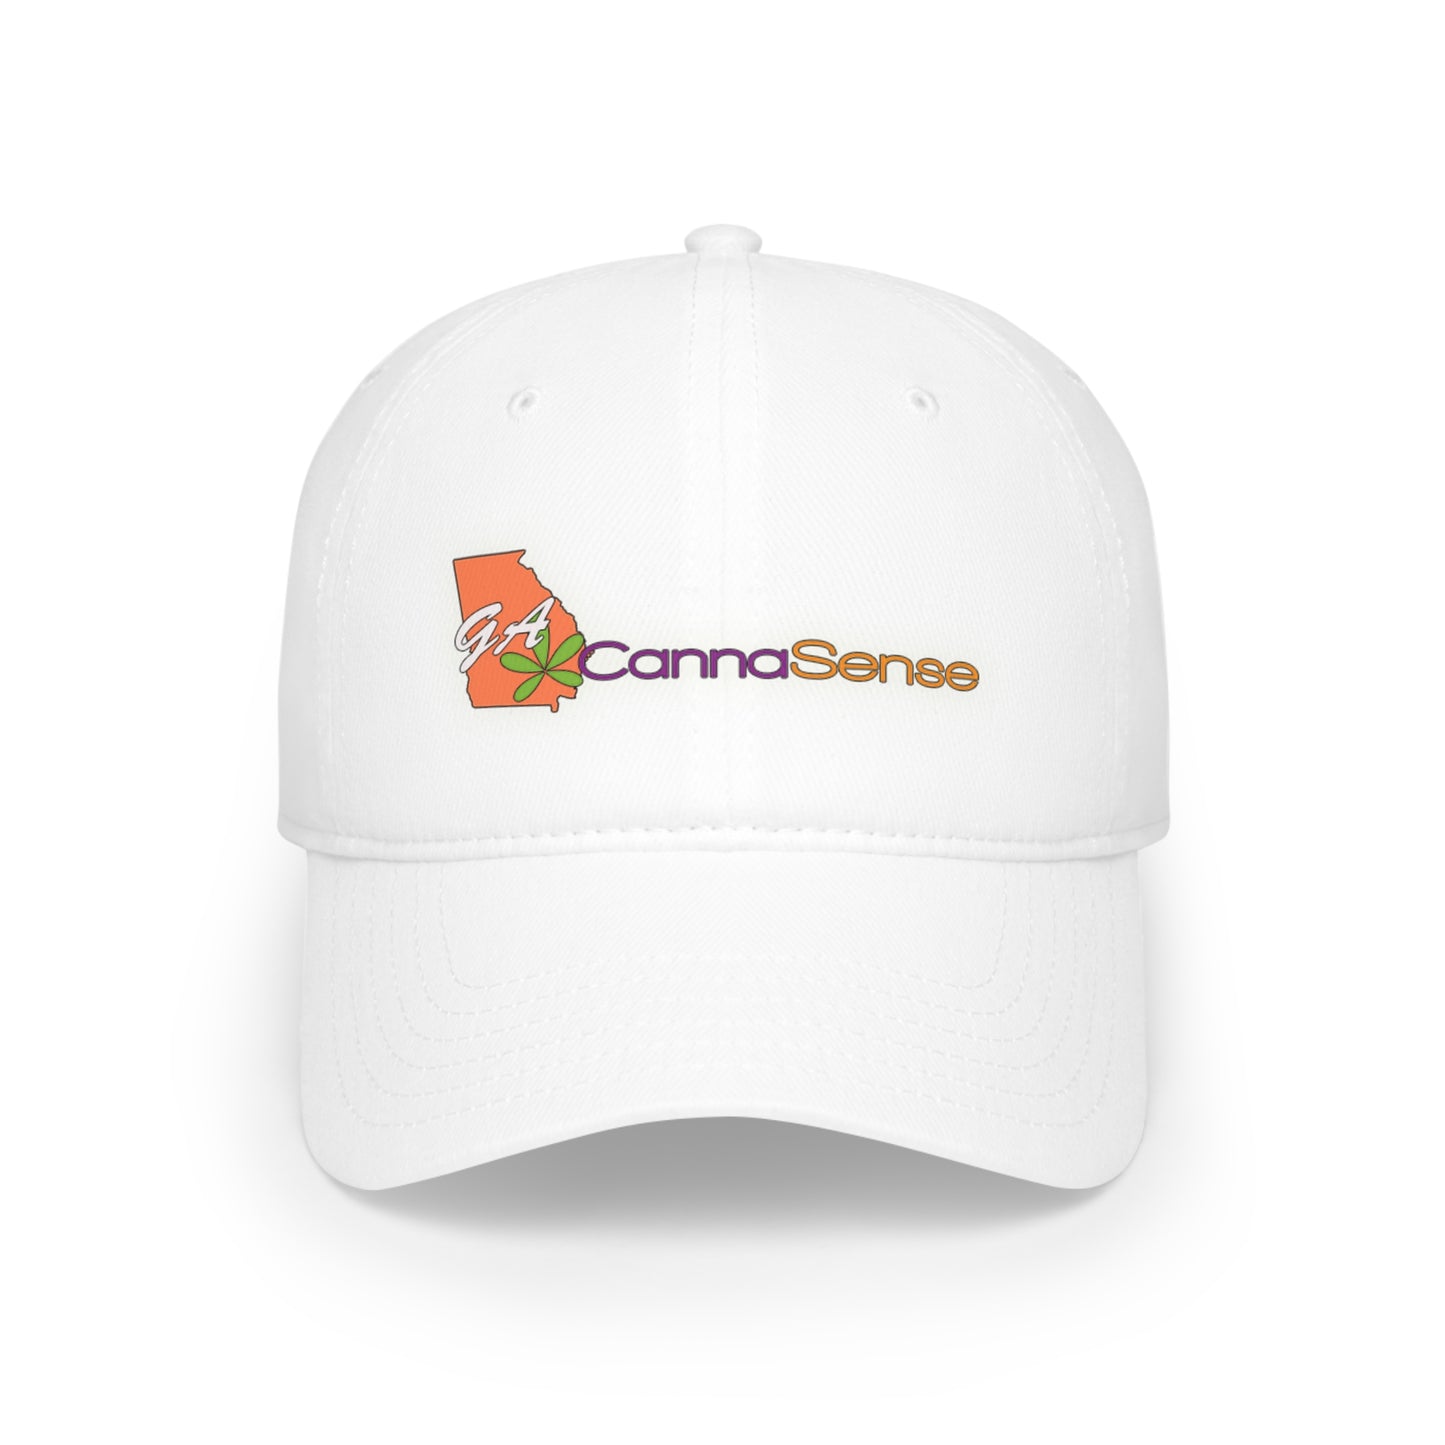 Ga CannaSense -Low Profile Baseball Cap-